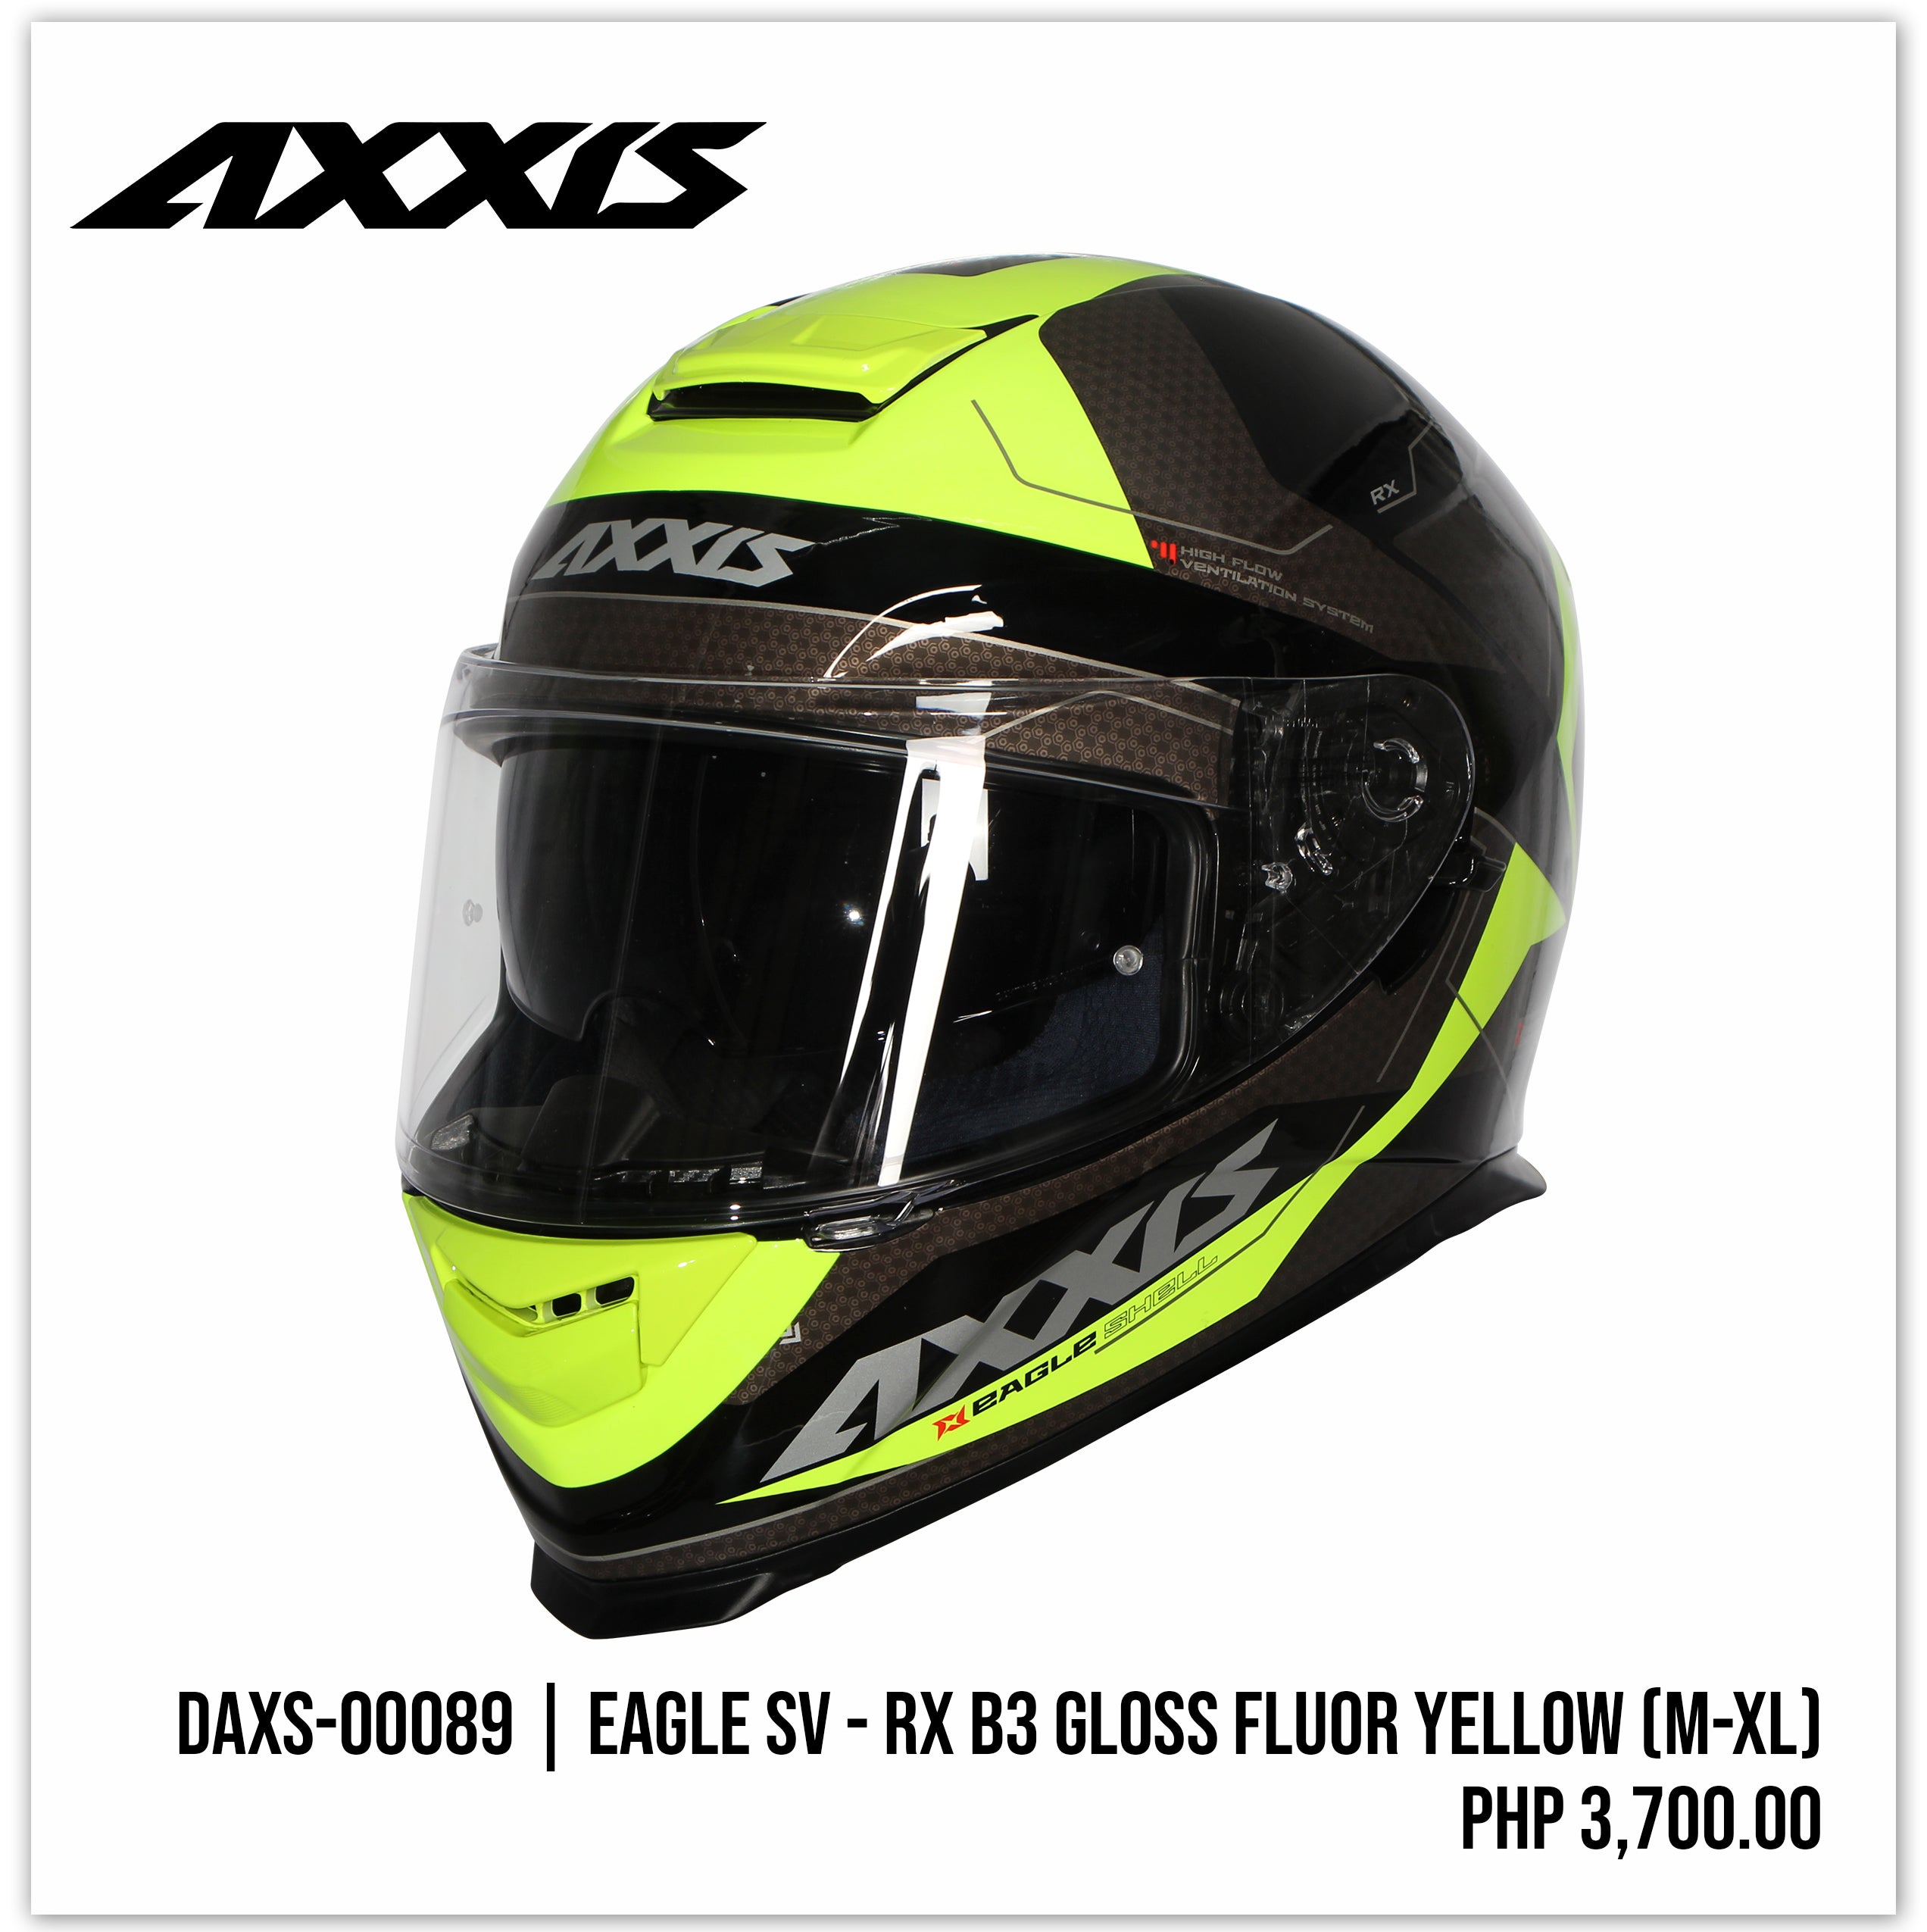 Eagle SV - RX B3 Gloss Fluor Yellow